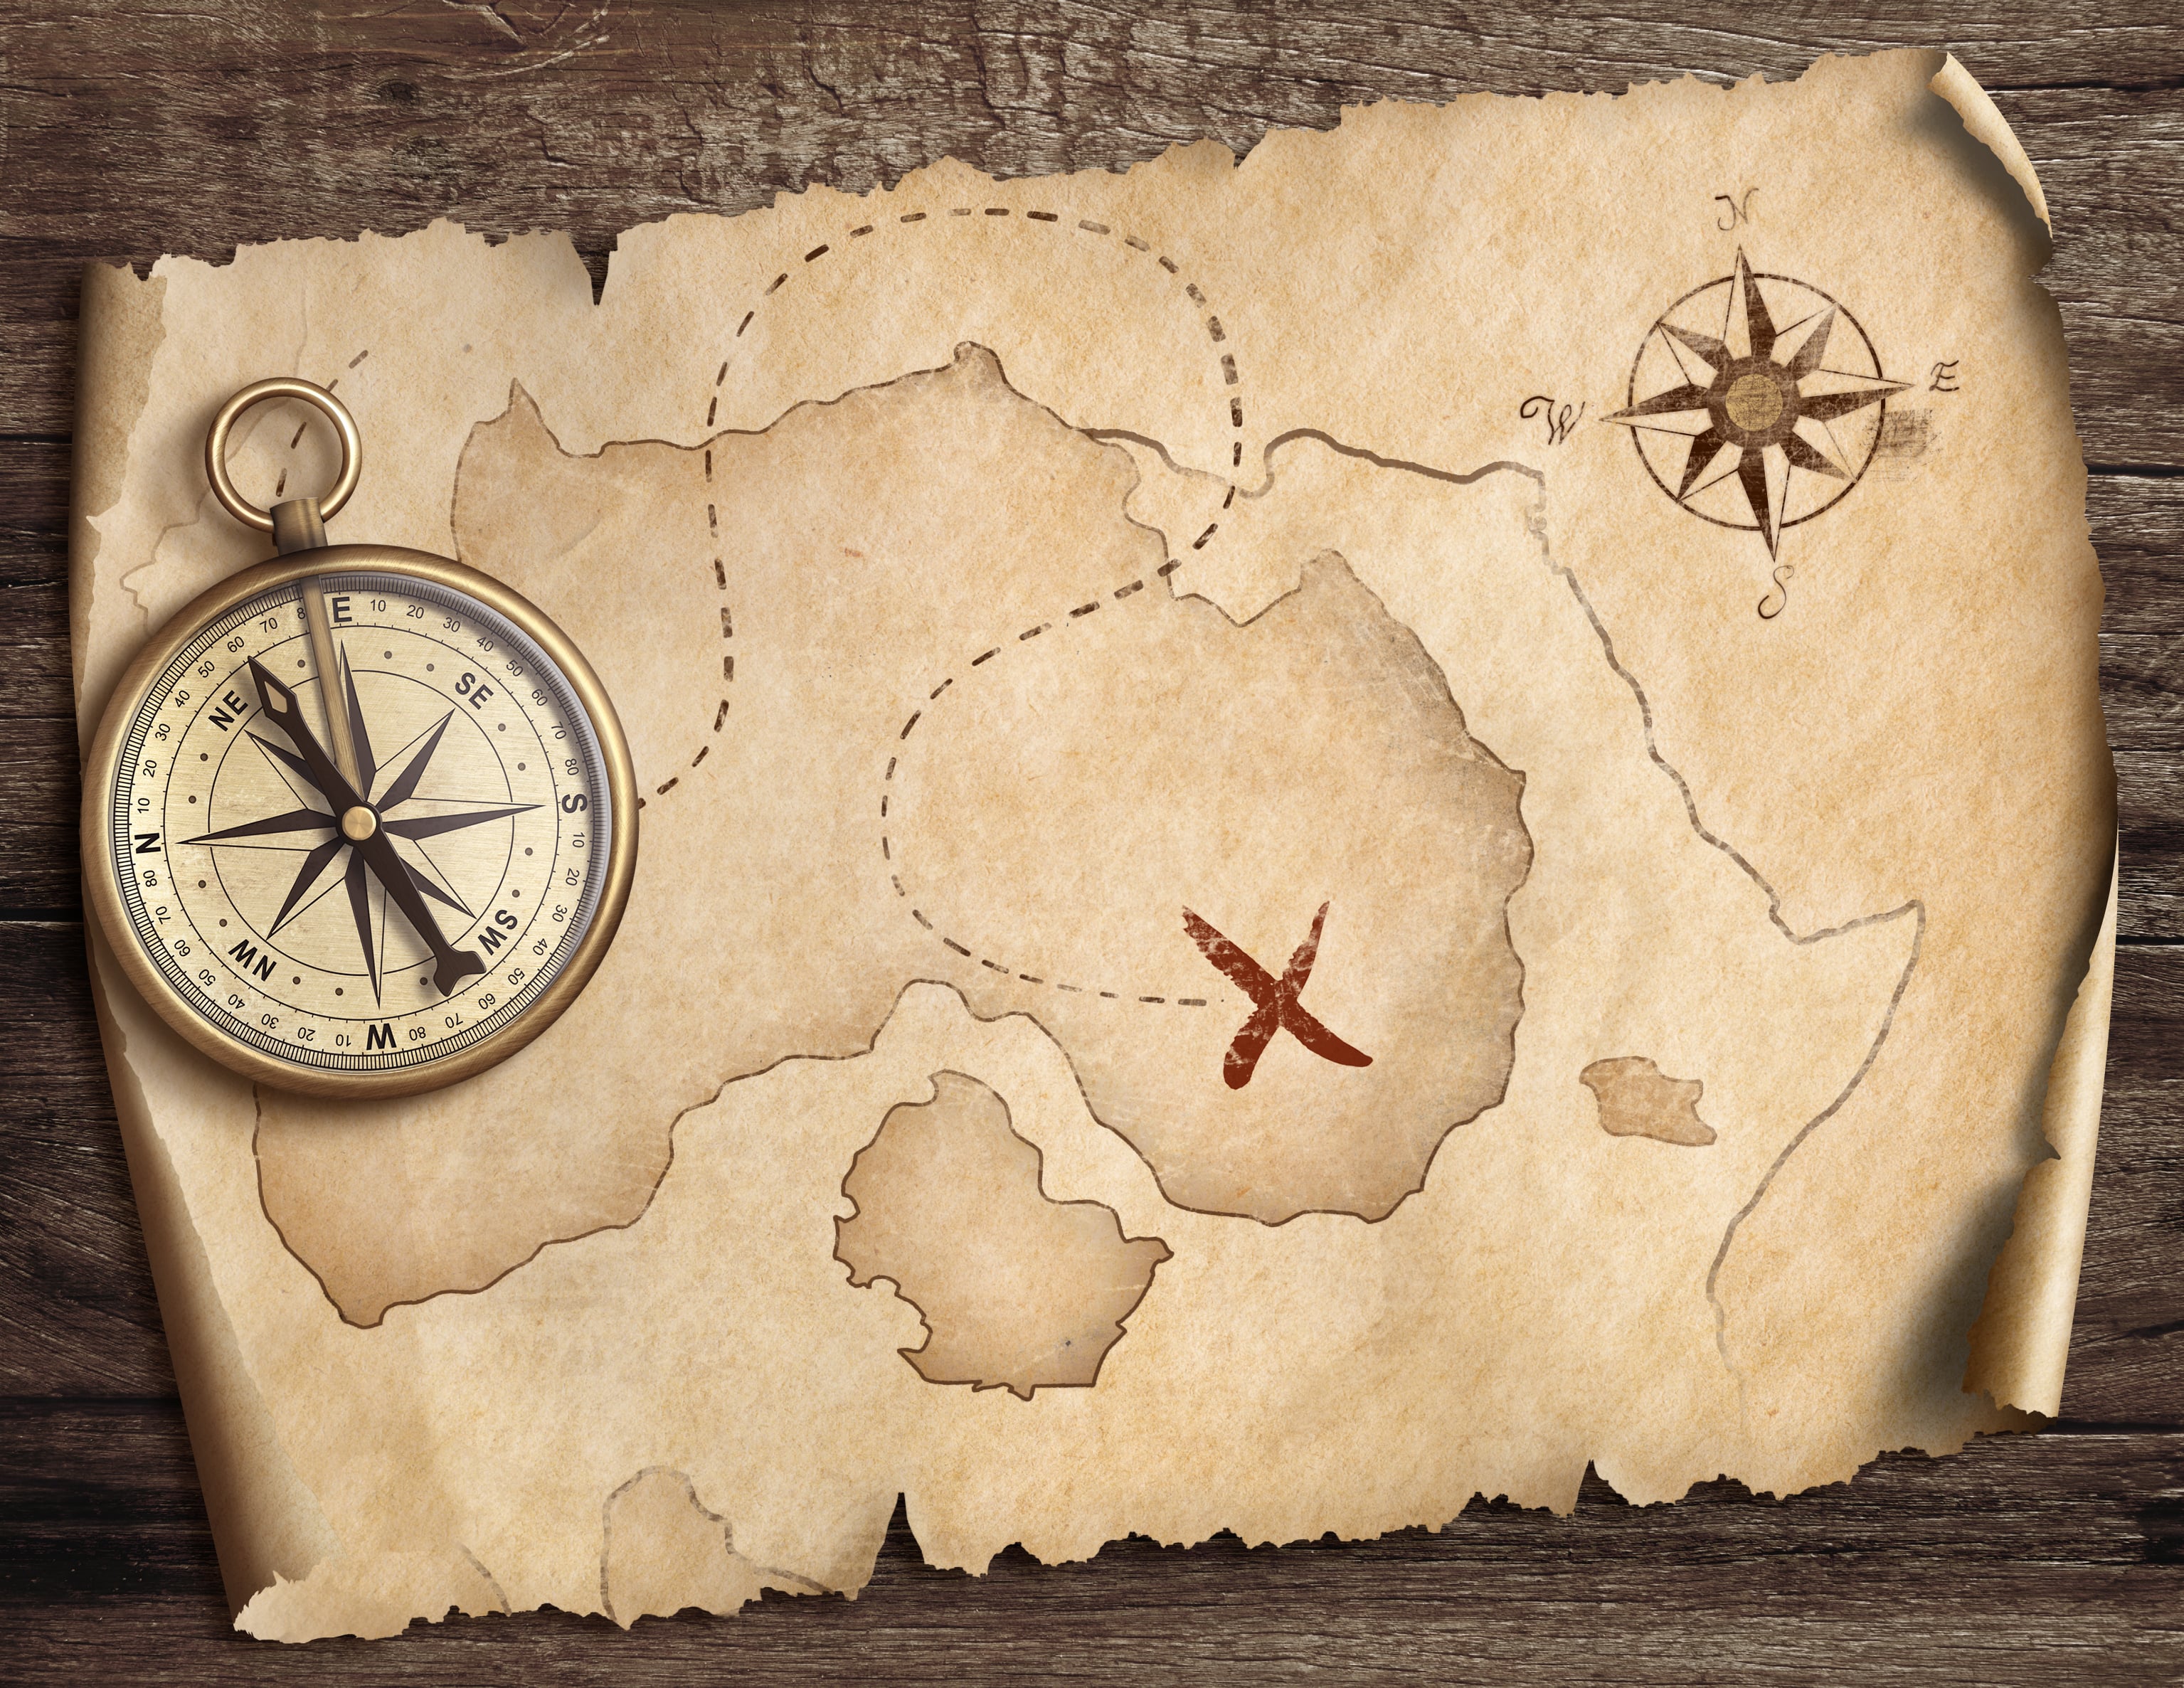 Включи компас на клад. Старинная карта сокровищ. Пиратская карта с компасом. Старинная карта с компасом.